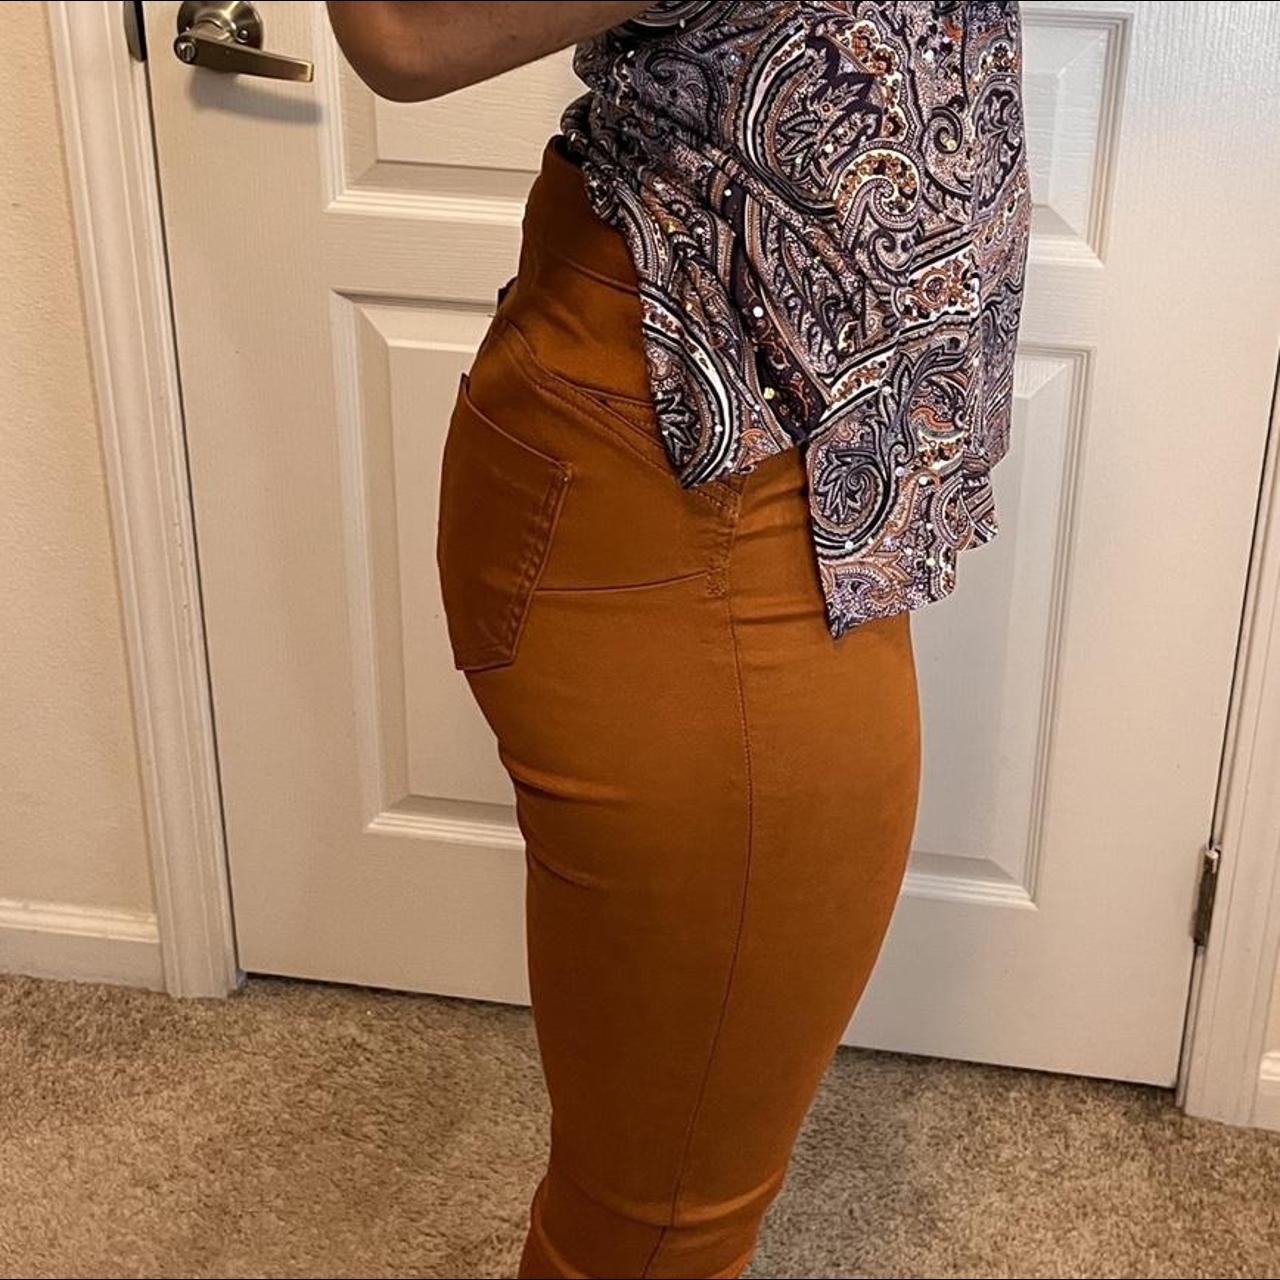 Calzedonia Women's Orange Trousers (4)